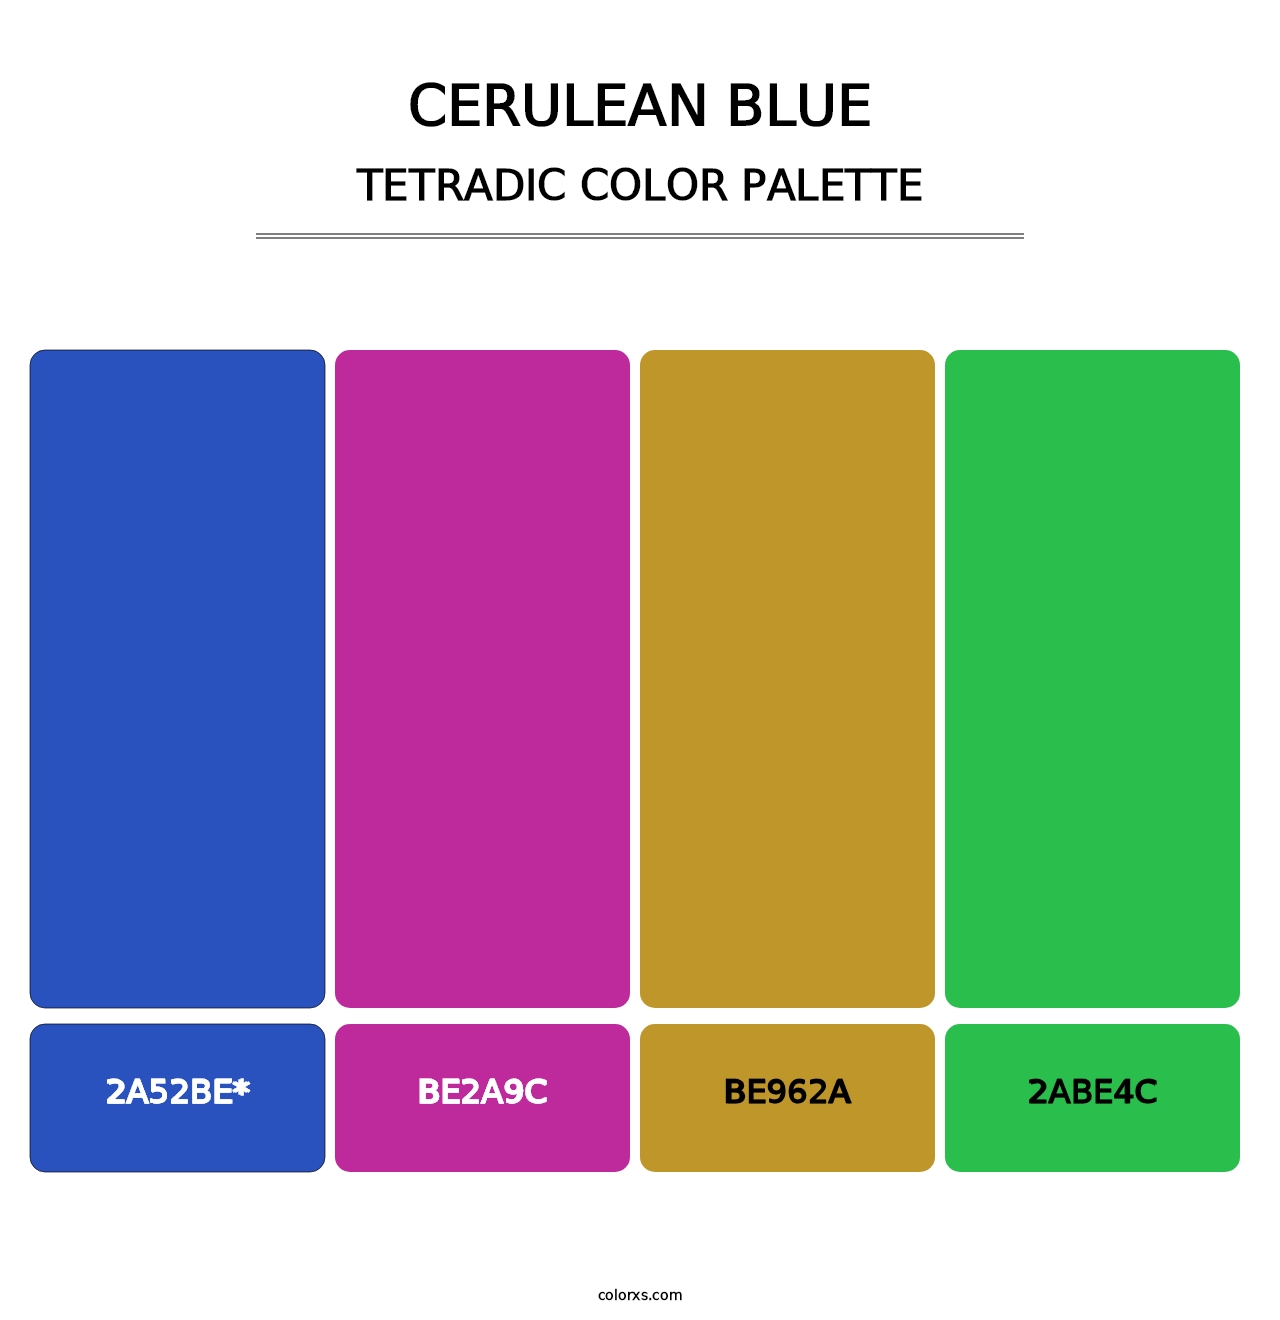 Cerulean blue - Tetradic Color Palette